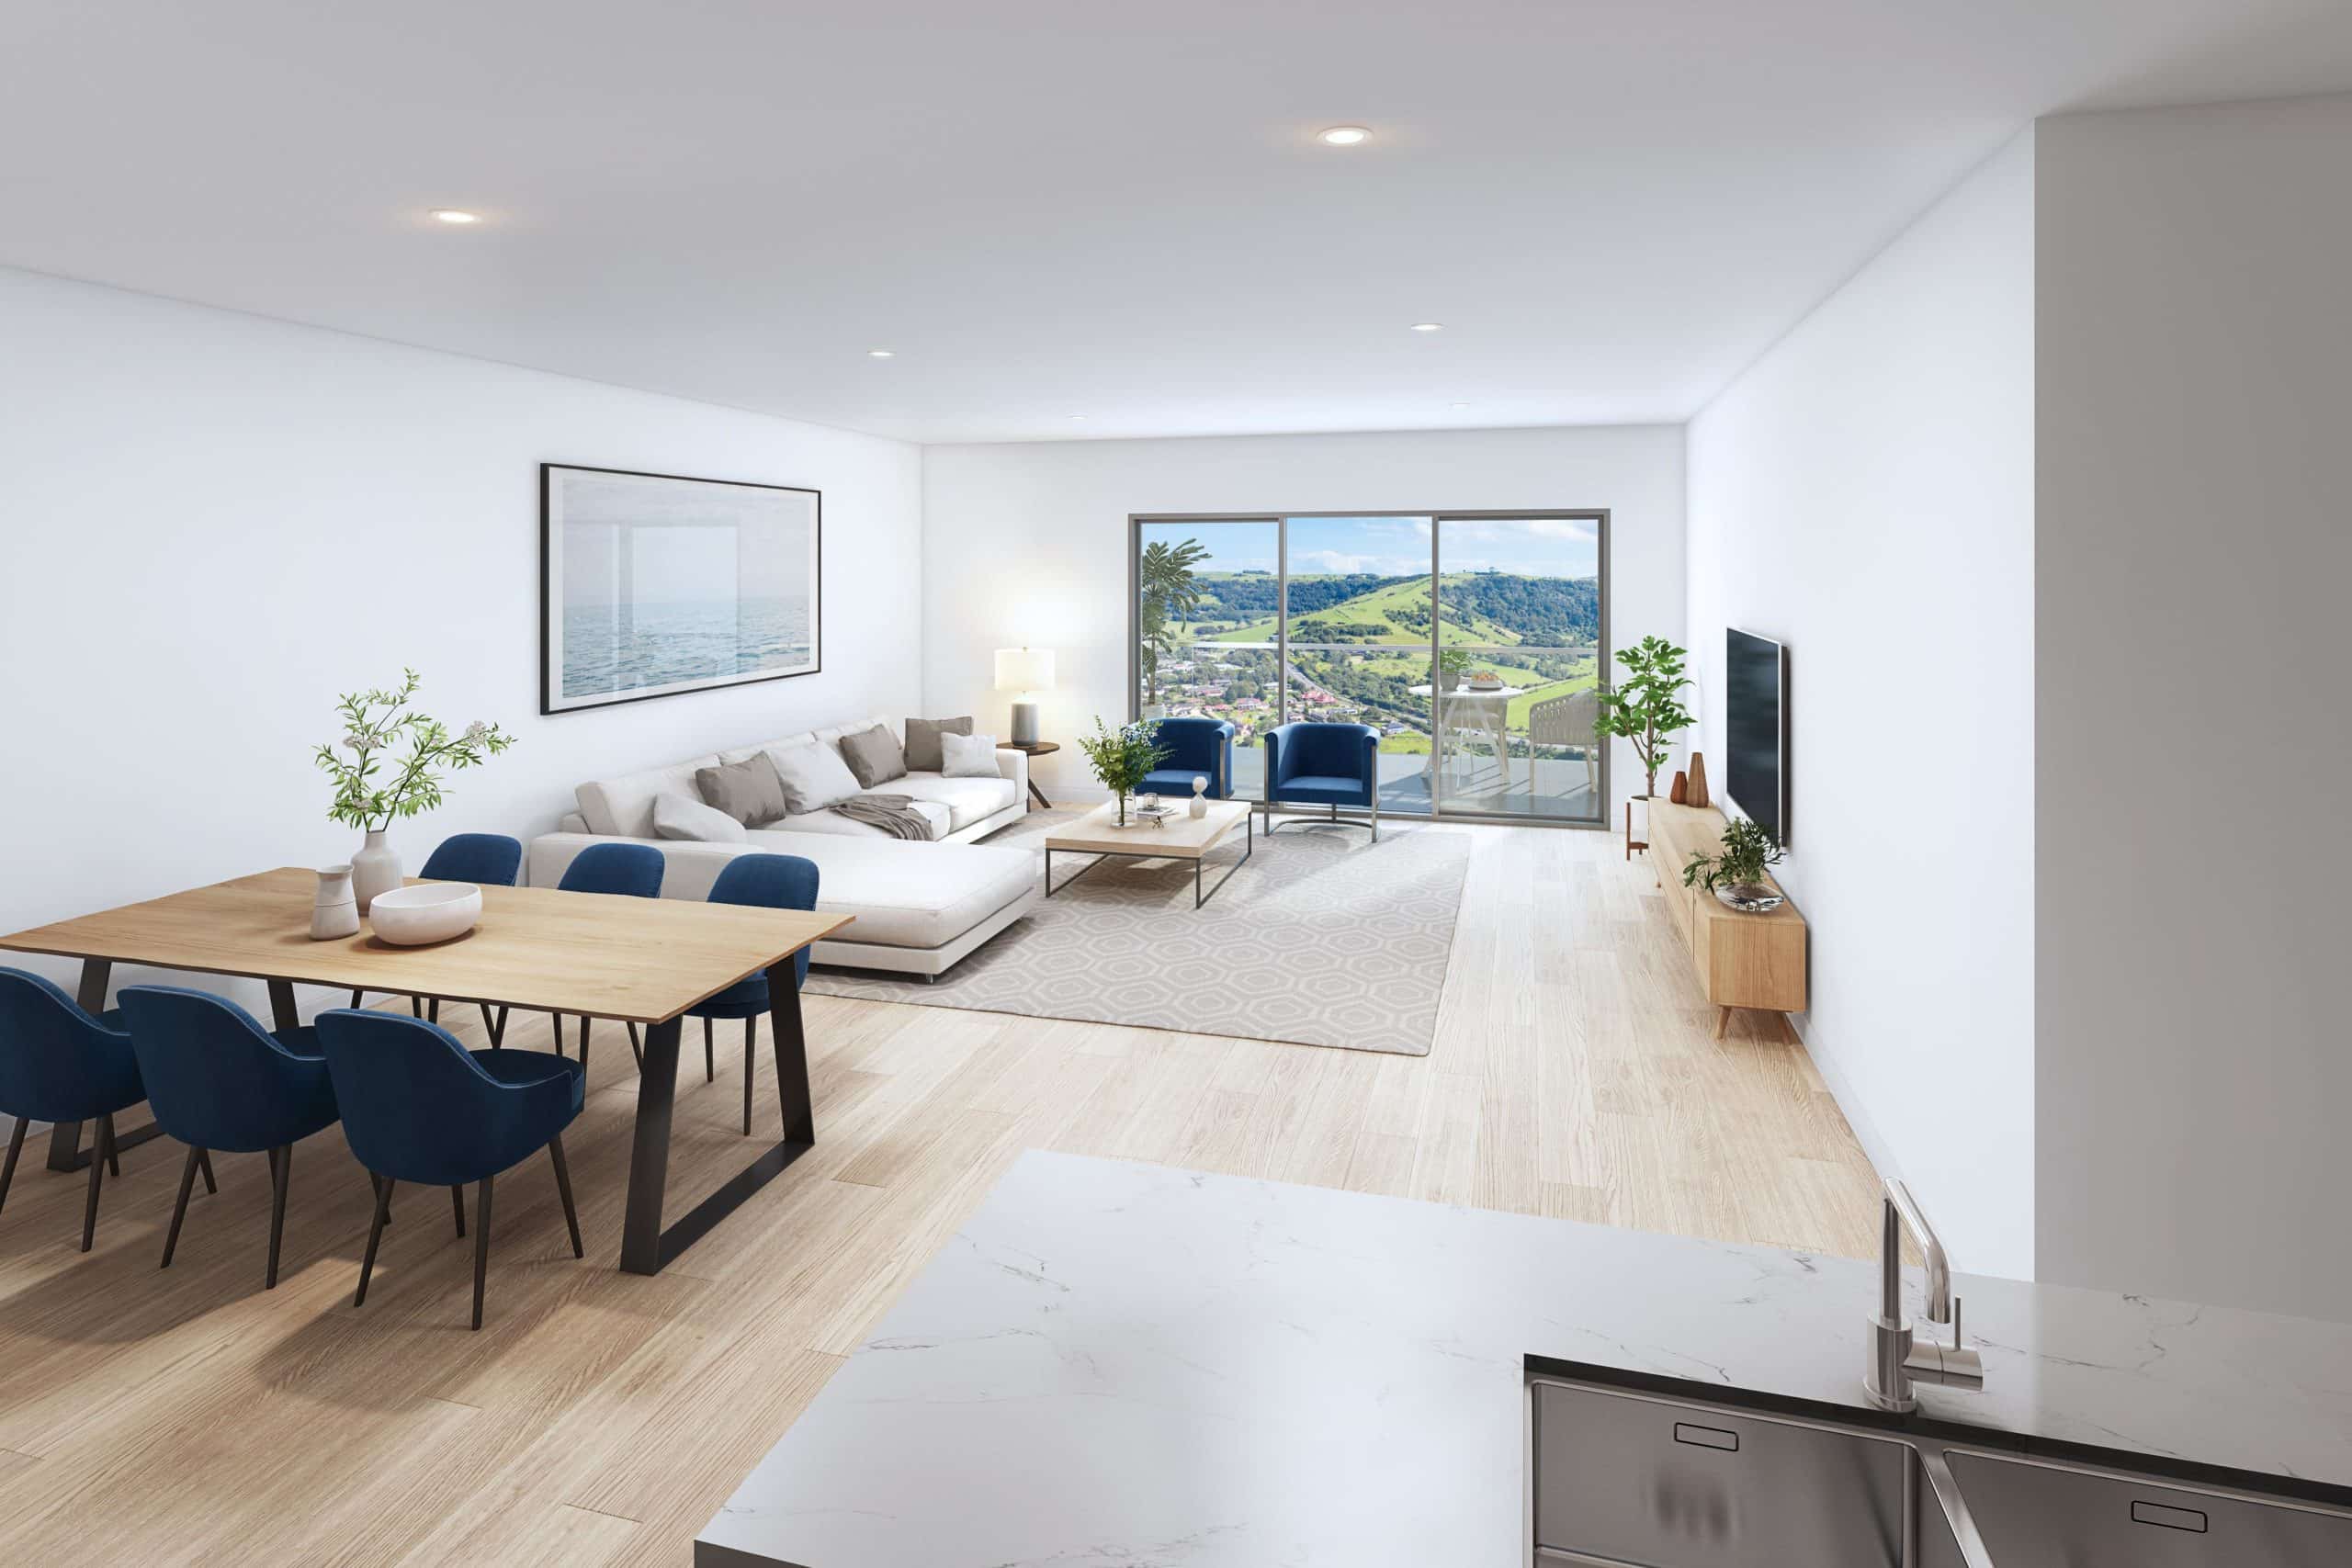 Elegant interior and modern appliances inside Ridgewaters Kiama apartments